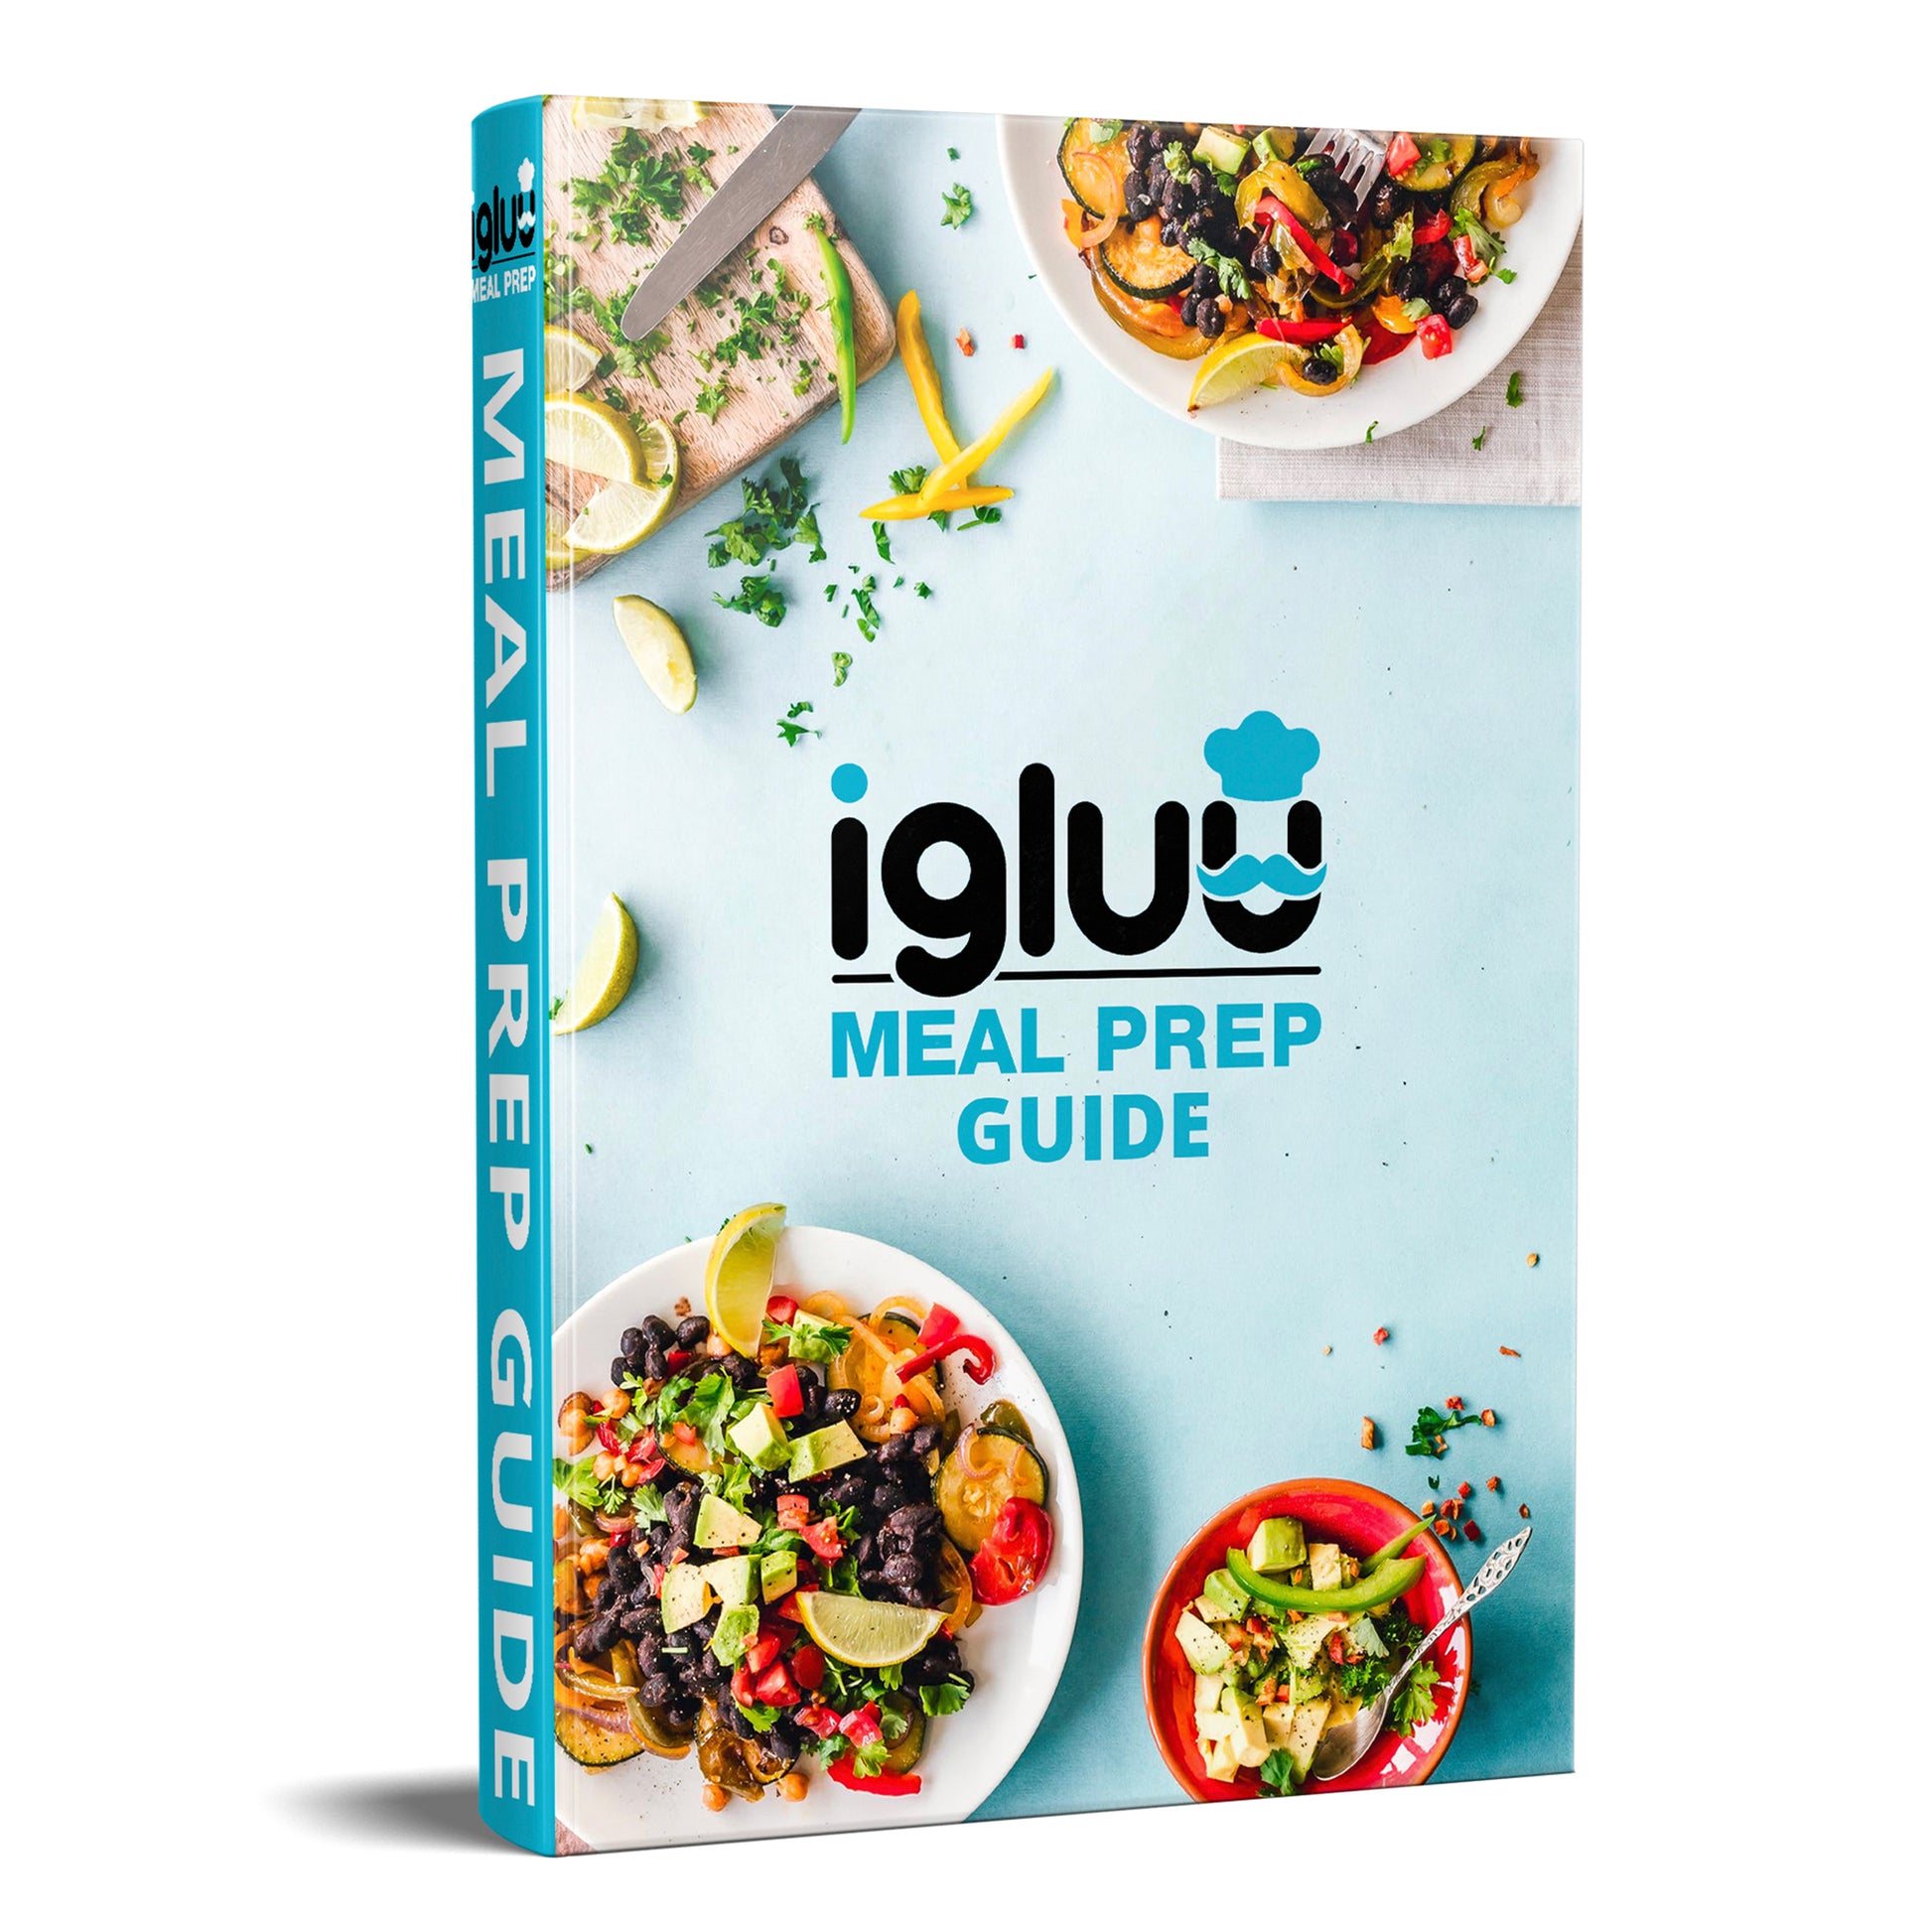 Igluu Meal Prep - . Did you know we deliver #igluumealprep